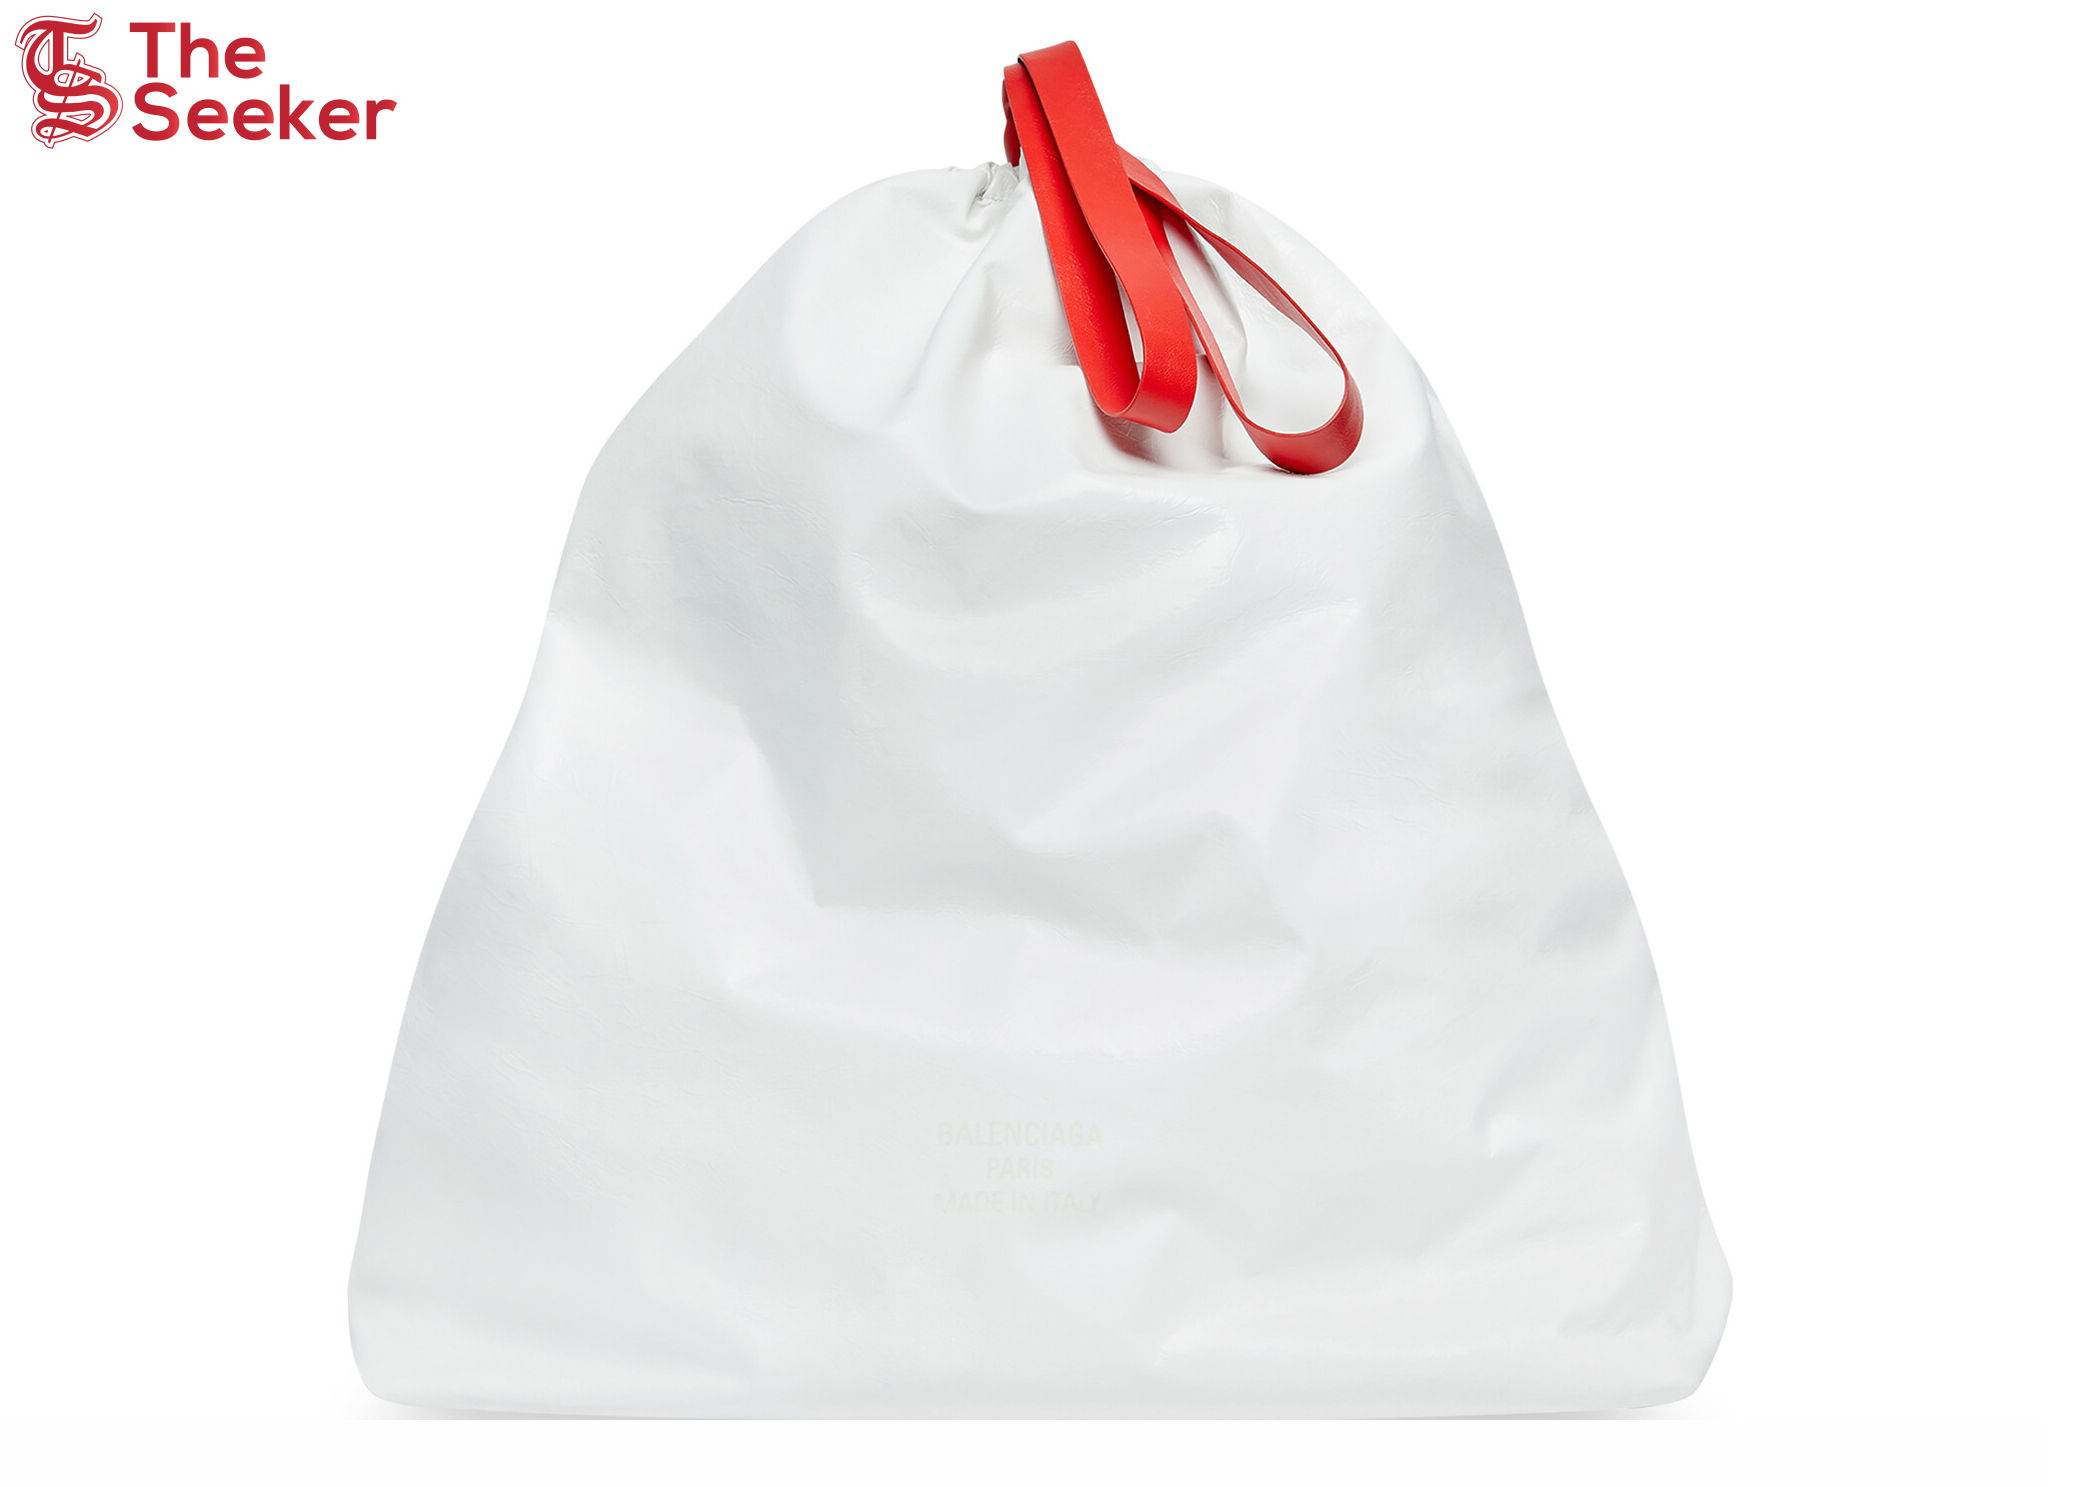 Balenciaga Trash Bag Large Pouch White/Red